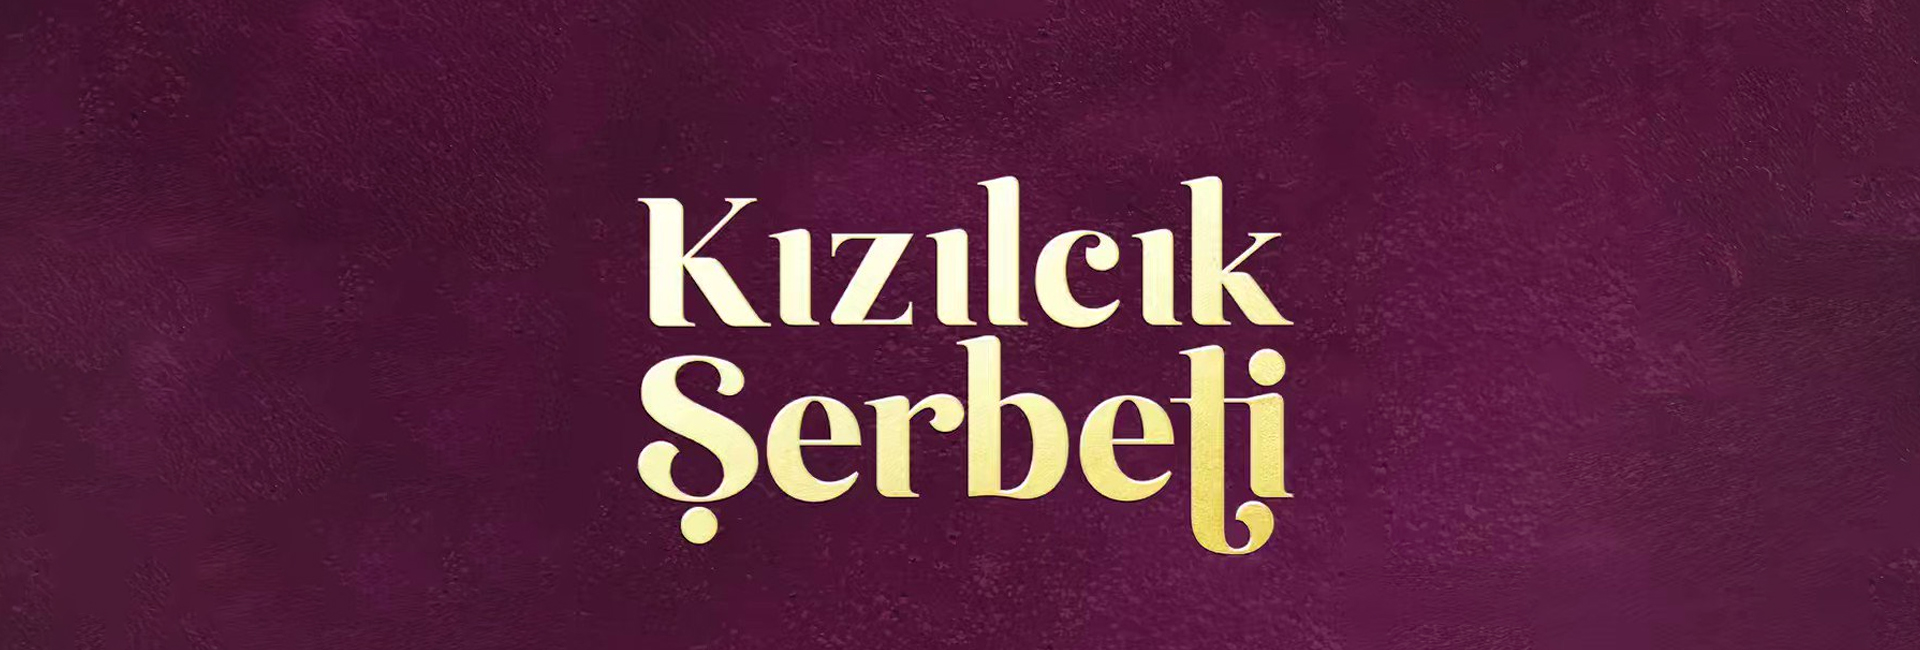 kizilcik-serbeti-landing.jpg (553 KB)